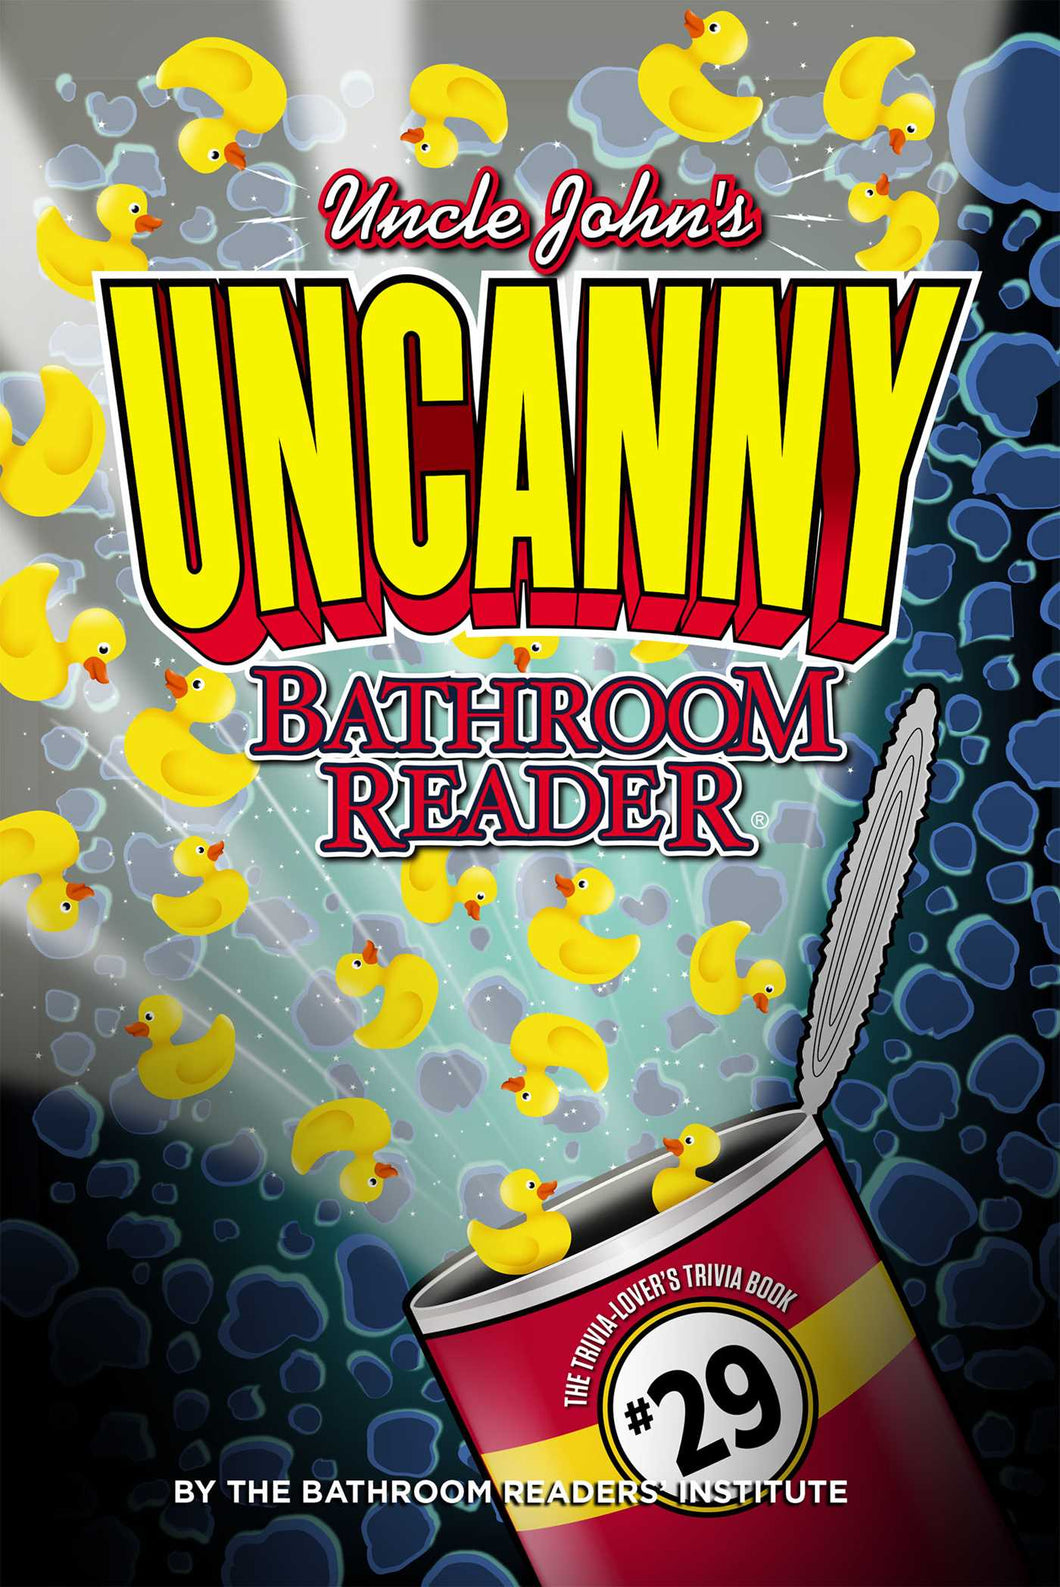 Uncle John's UNCANNY Bathroom Reader